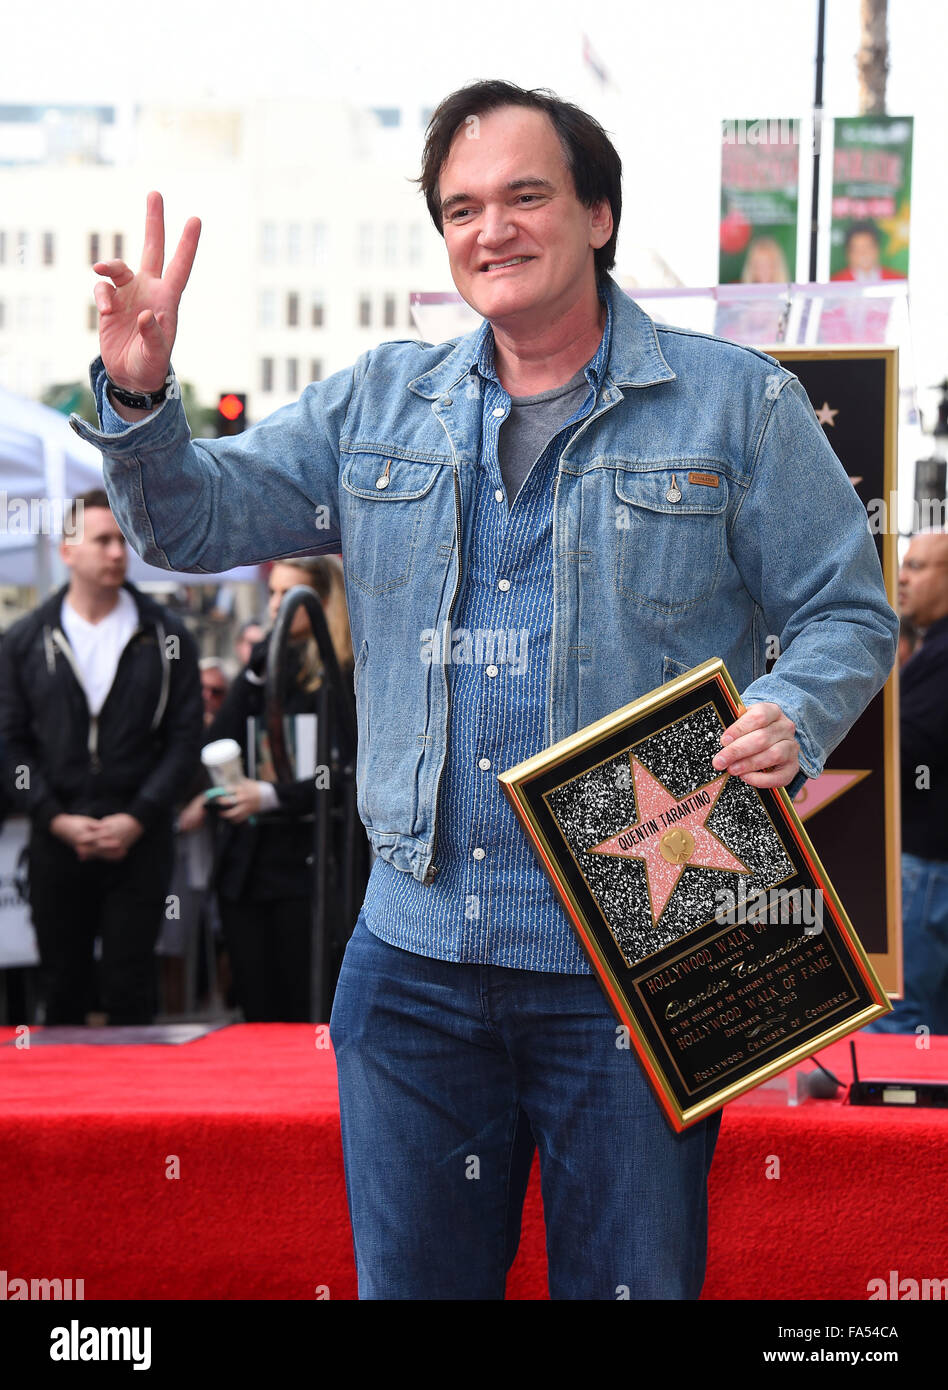 Hollywood, Kalifornien, USA. 21. Dezember 2015. Quentin Tarantino als dem Walk of Fame ehrt Quentin Tarantino auf Hollywood Blvd. Kredit: Lisa O'Connor/ZUMA Draht/Alamy Live News Stockfoto